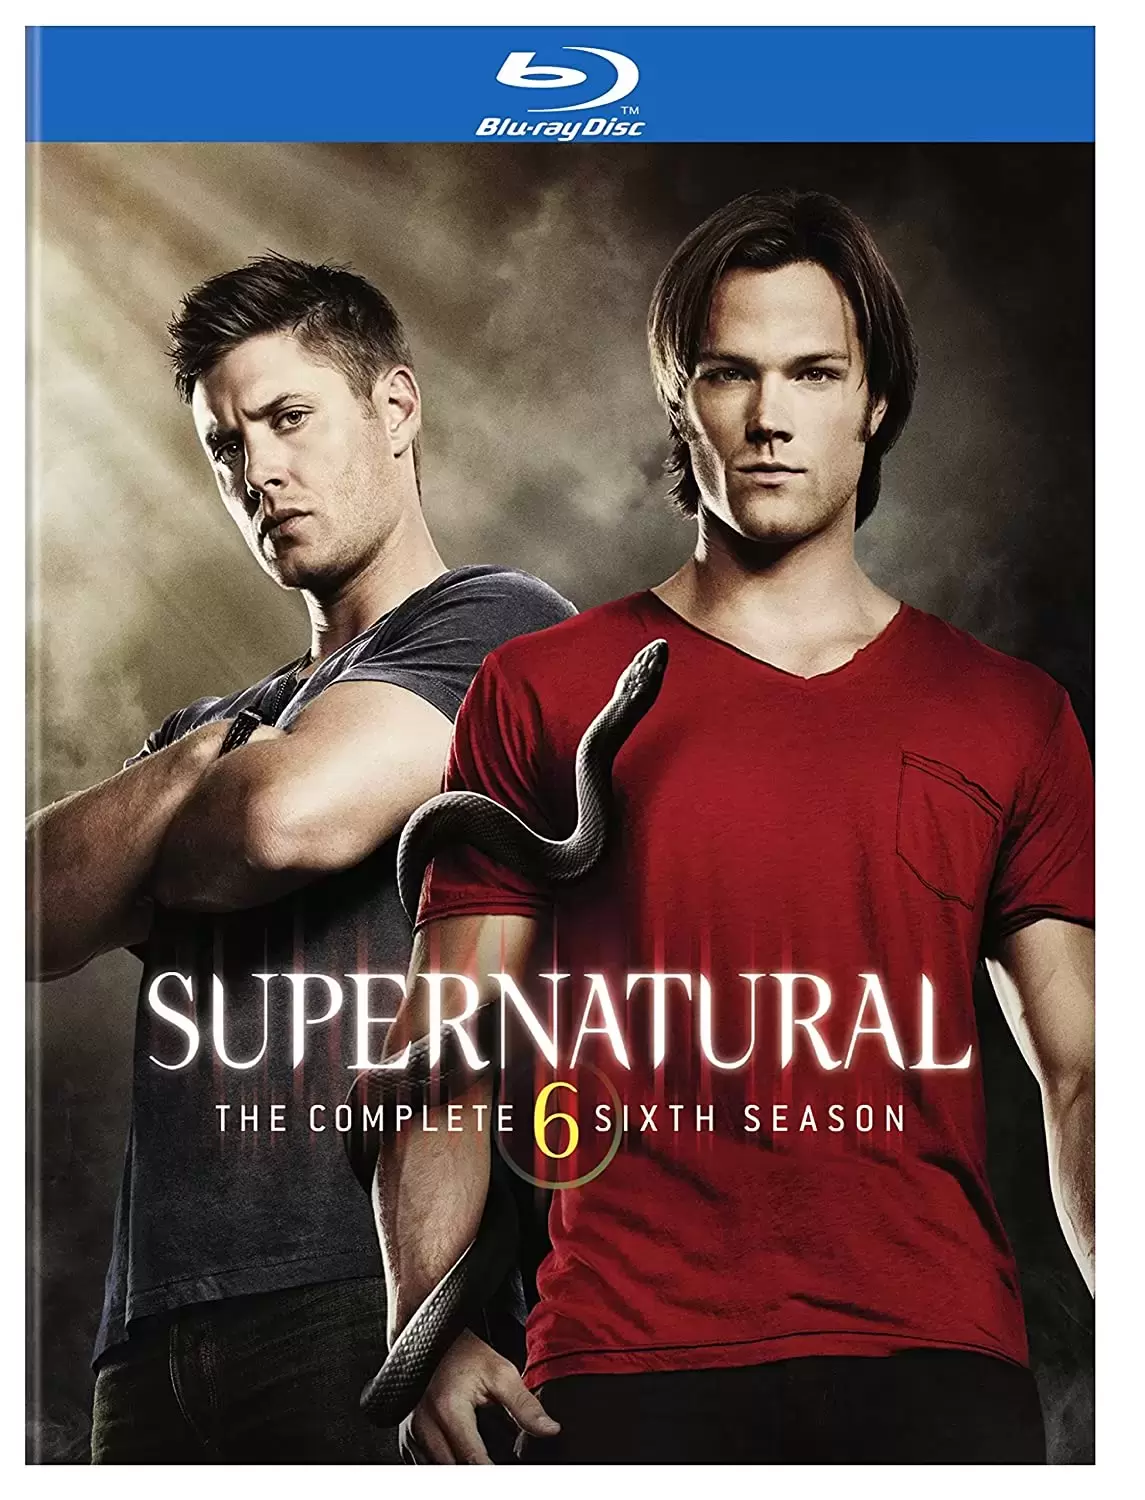 Supernatural - supernatural complete 6 season blu ray